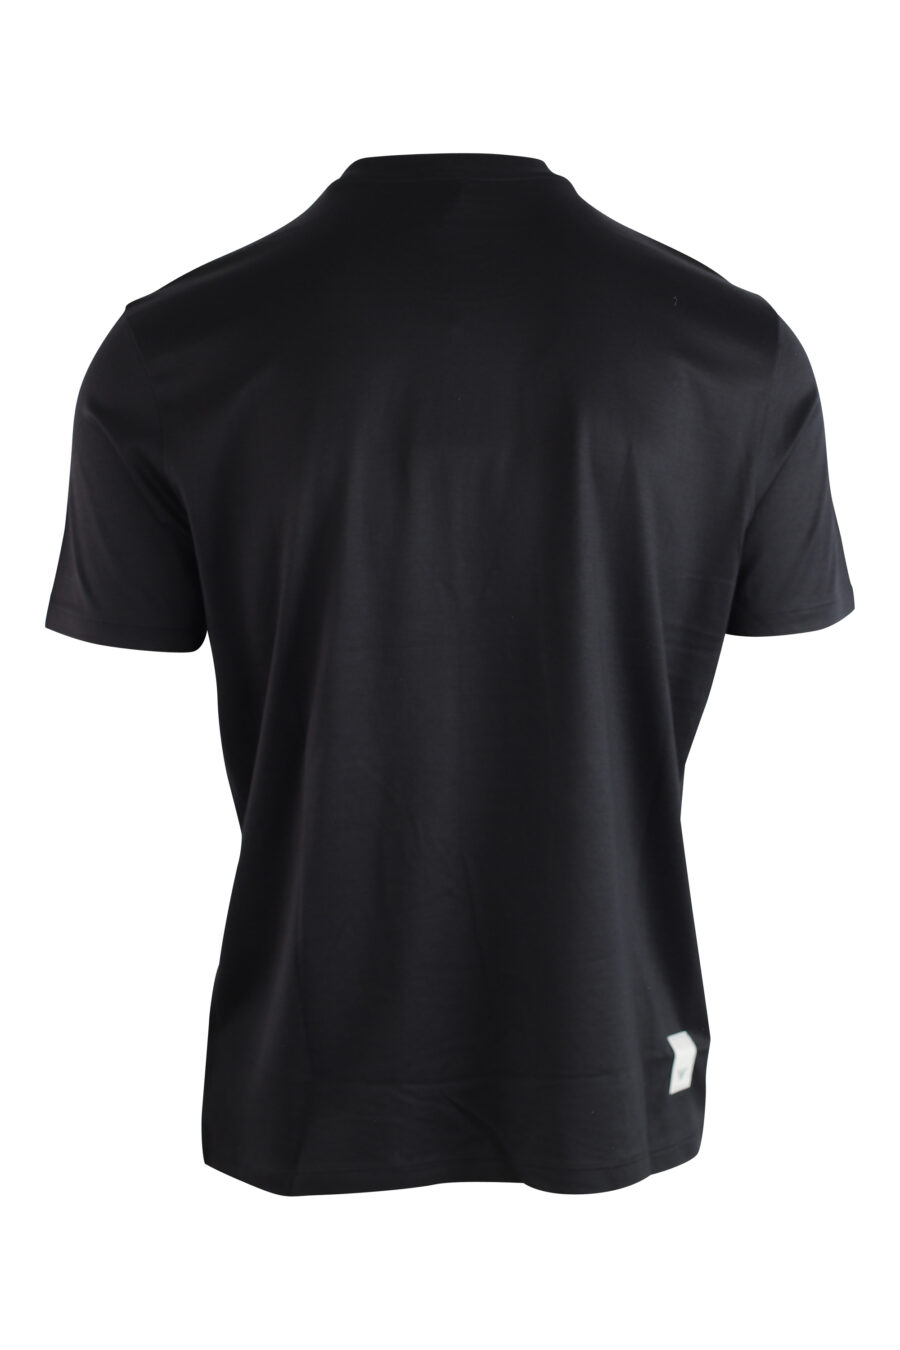 Camiseta negra con minilogo águila - IMG 3736